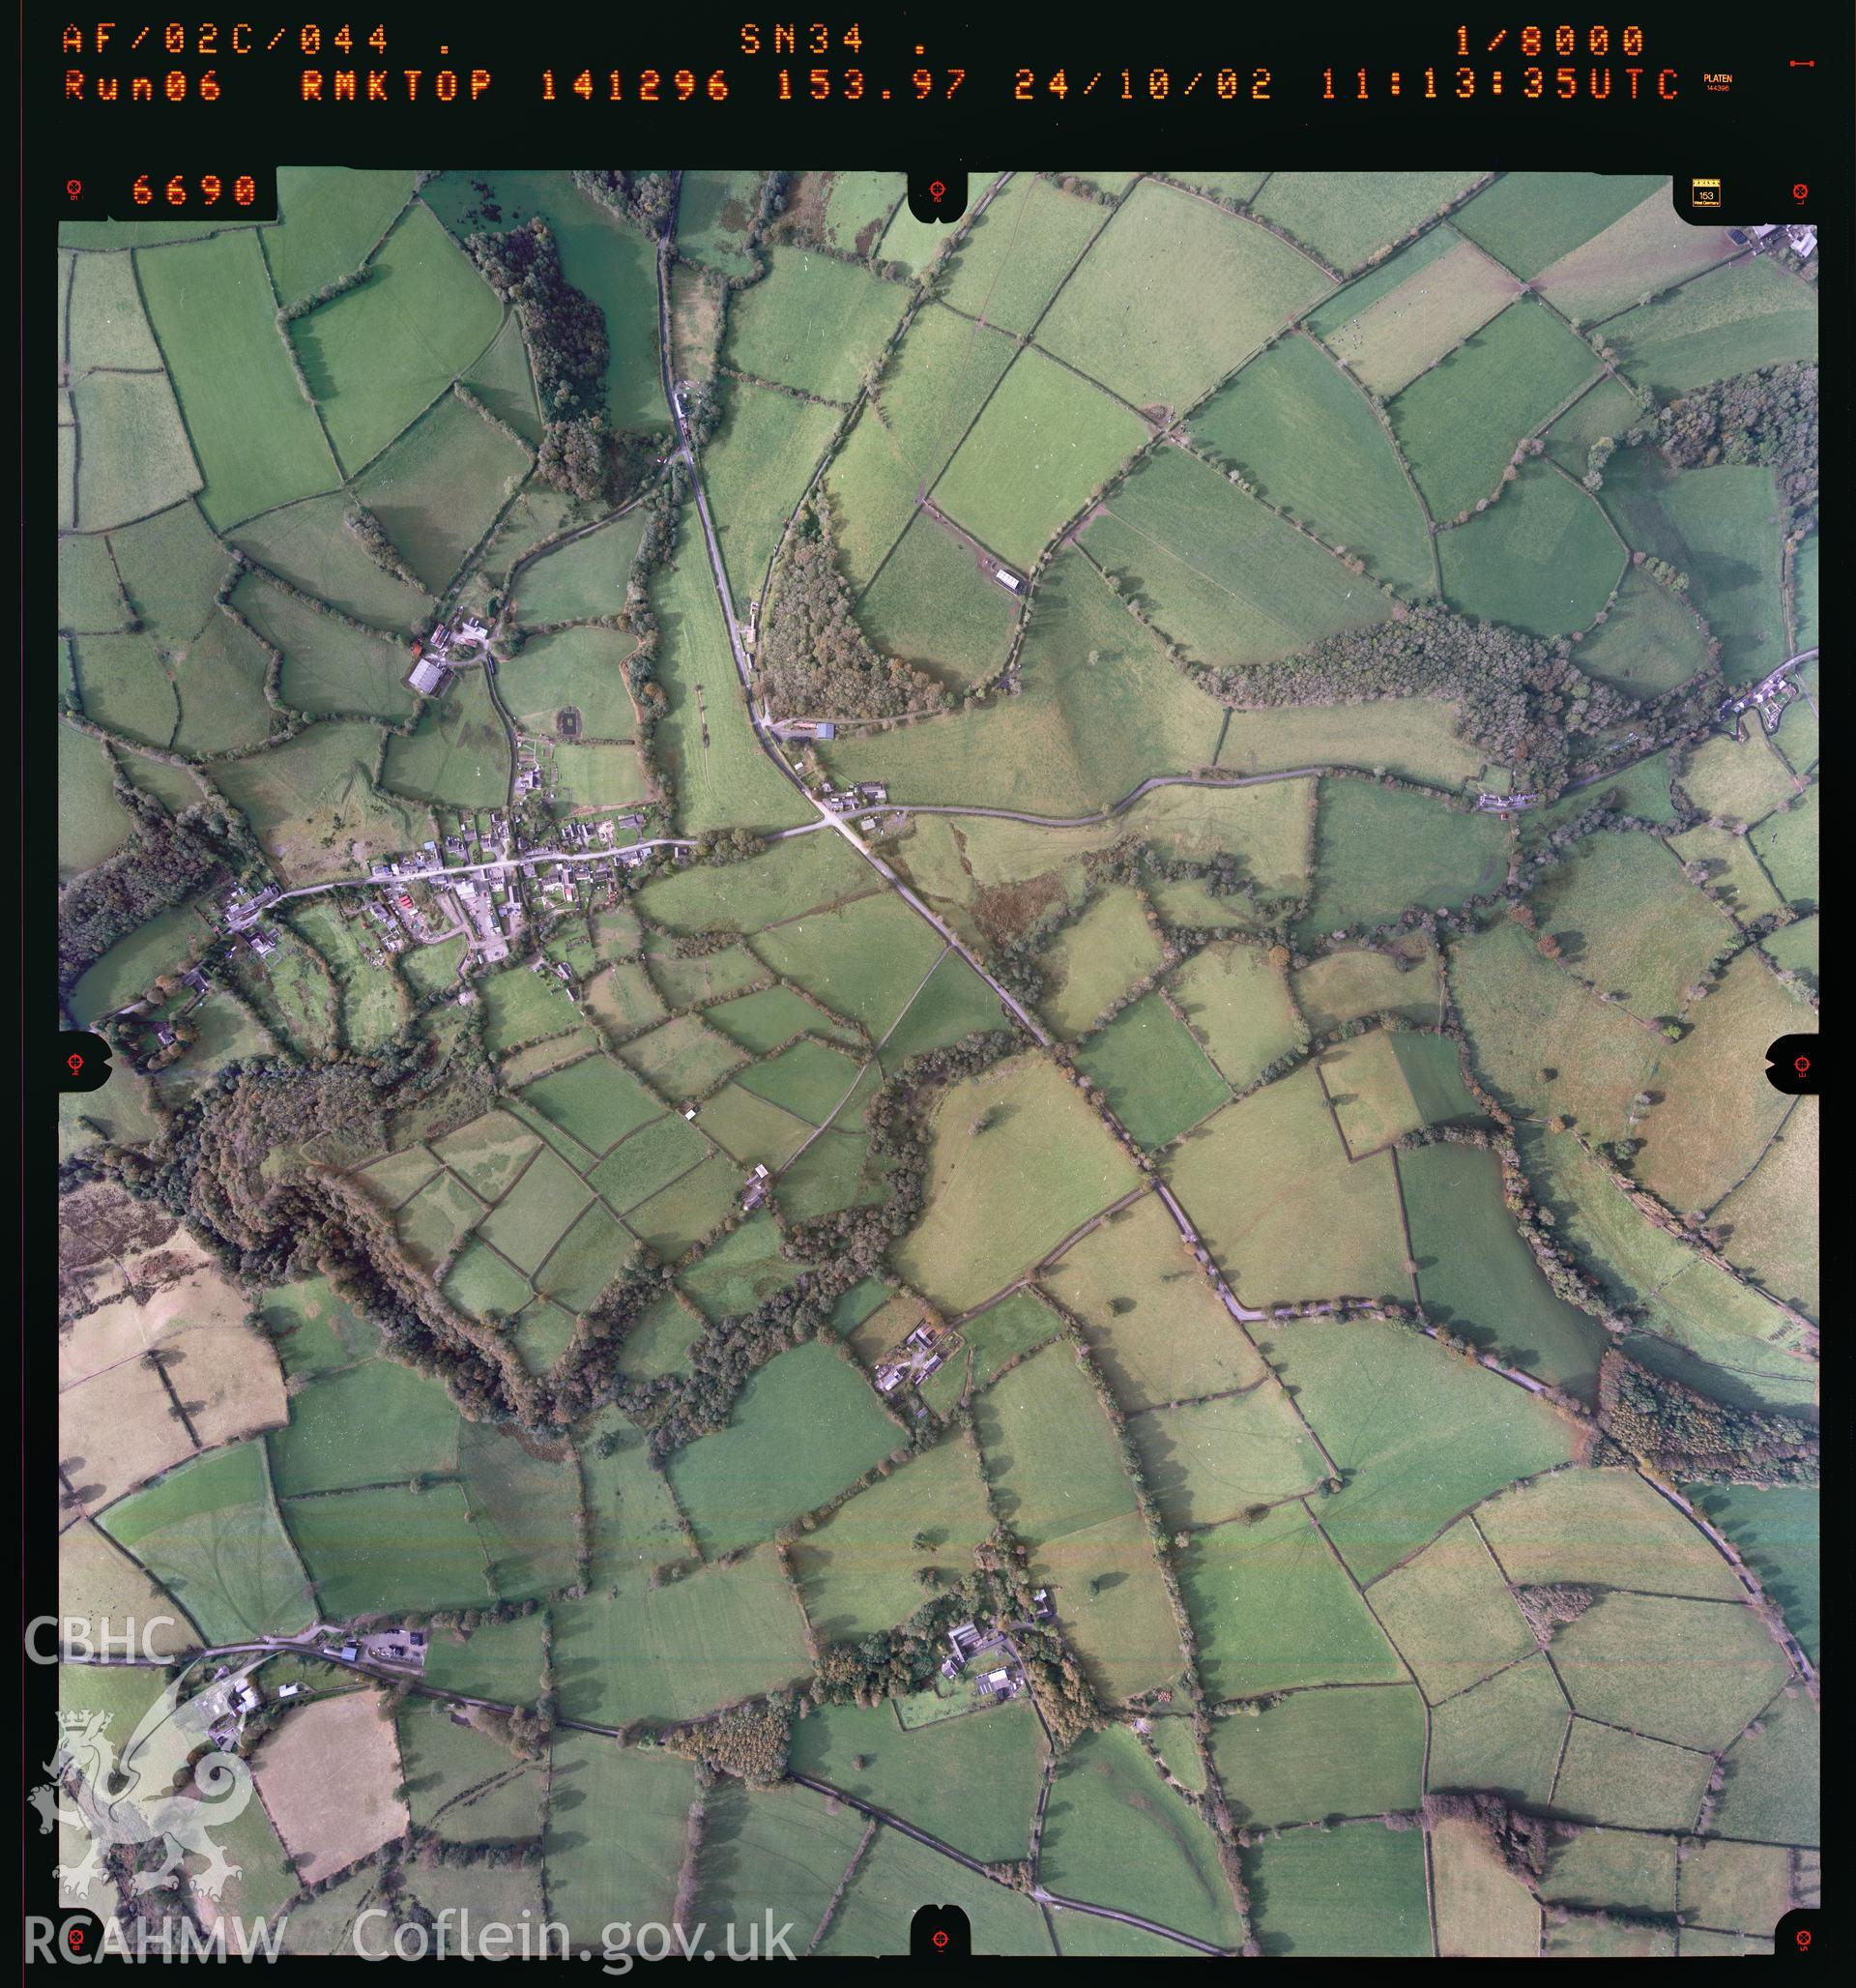 Digitized copy of a colour aerial photograph showing the Llandysul area, taken by Ordnance Survey, 2002.